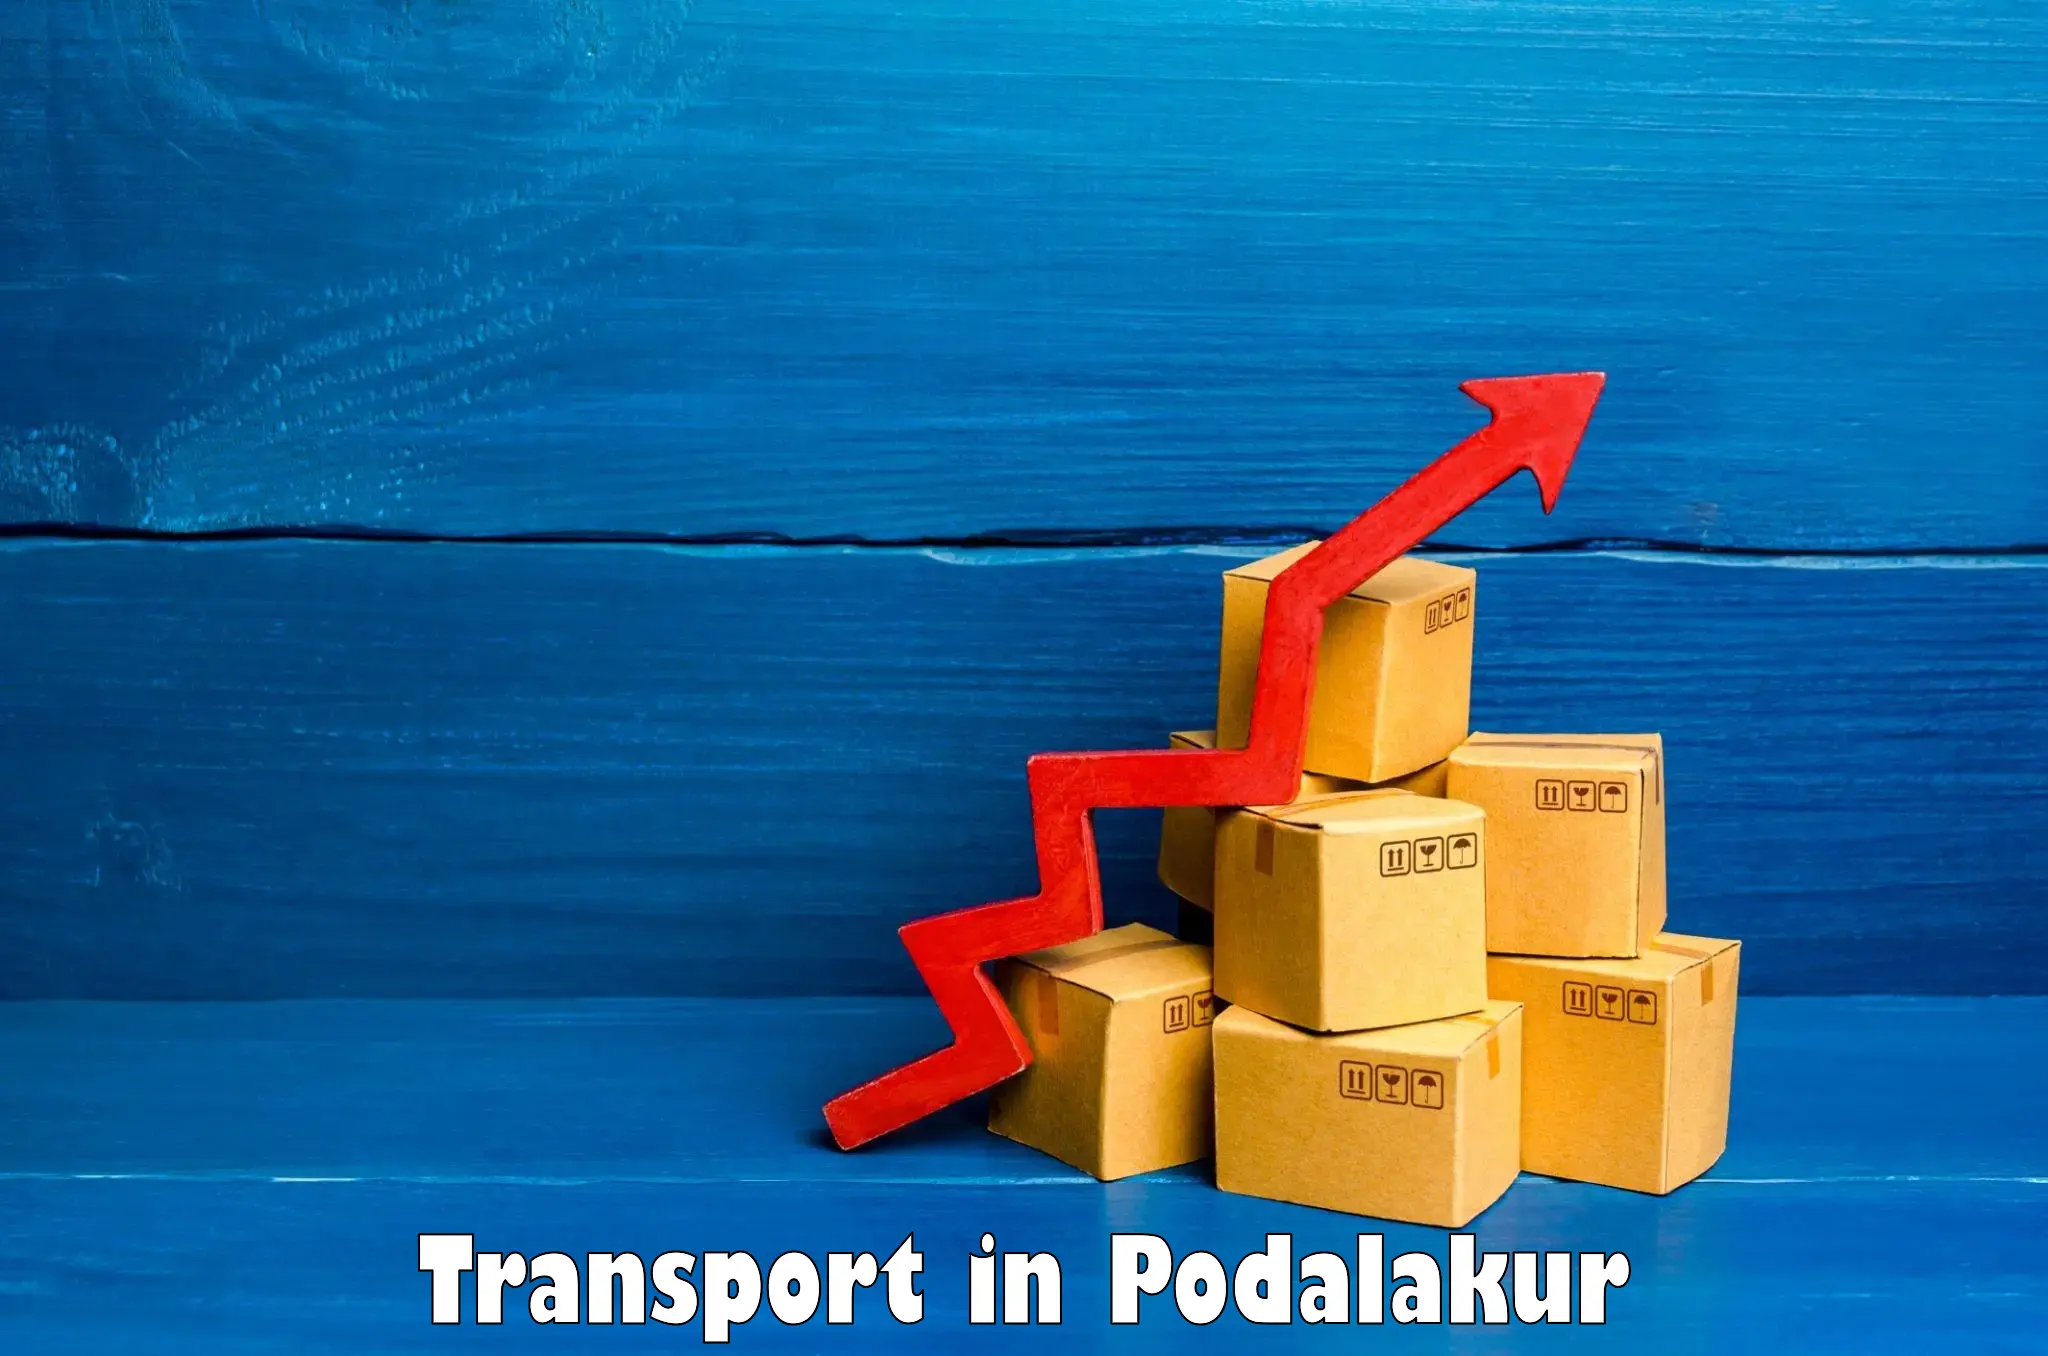 Transportation services in Podalakur